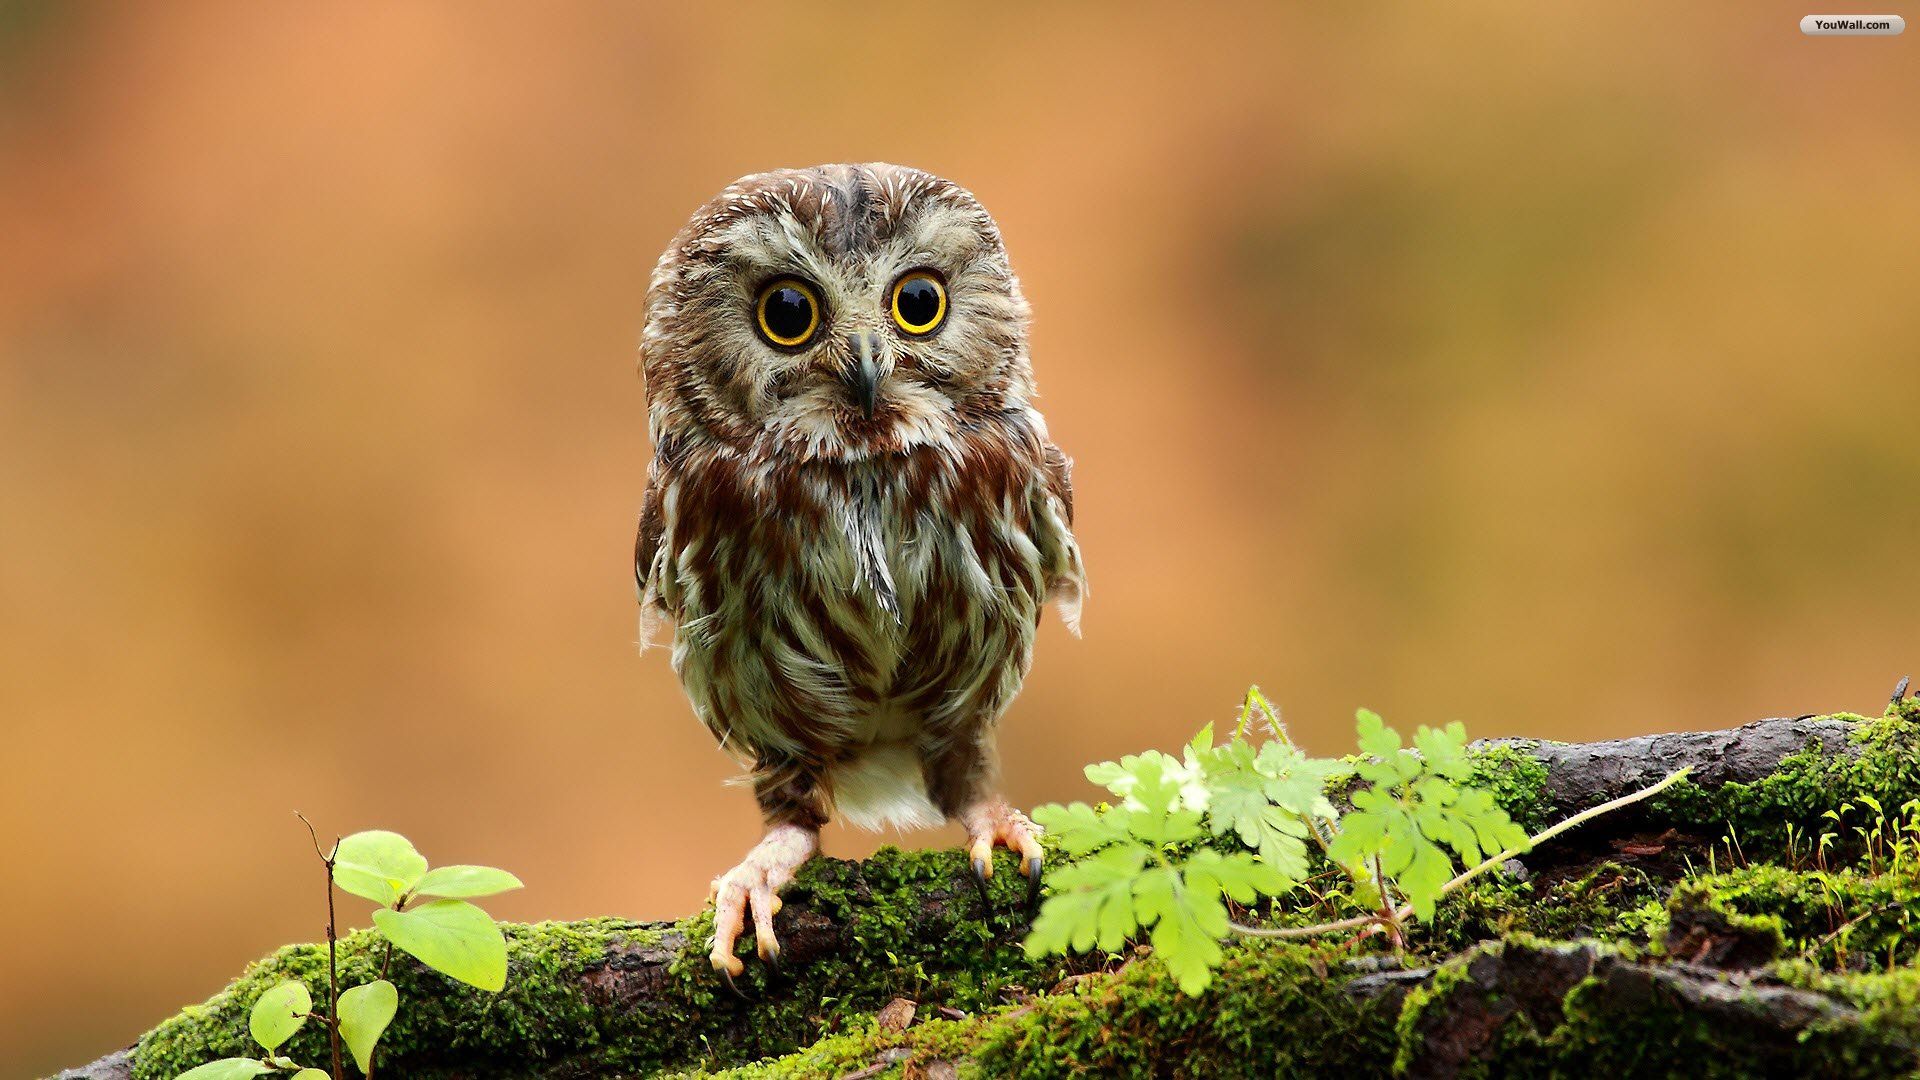 Cute Baby Owl - wallpaper